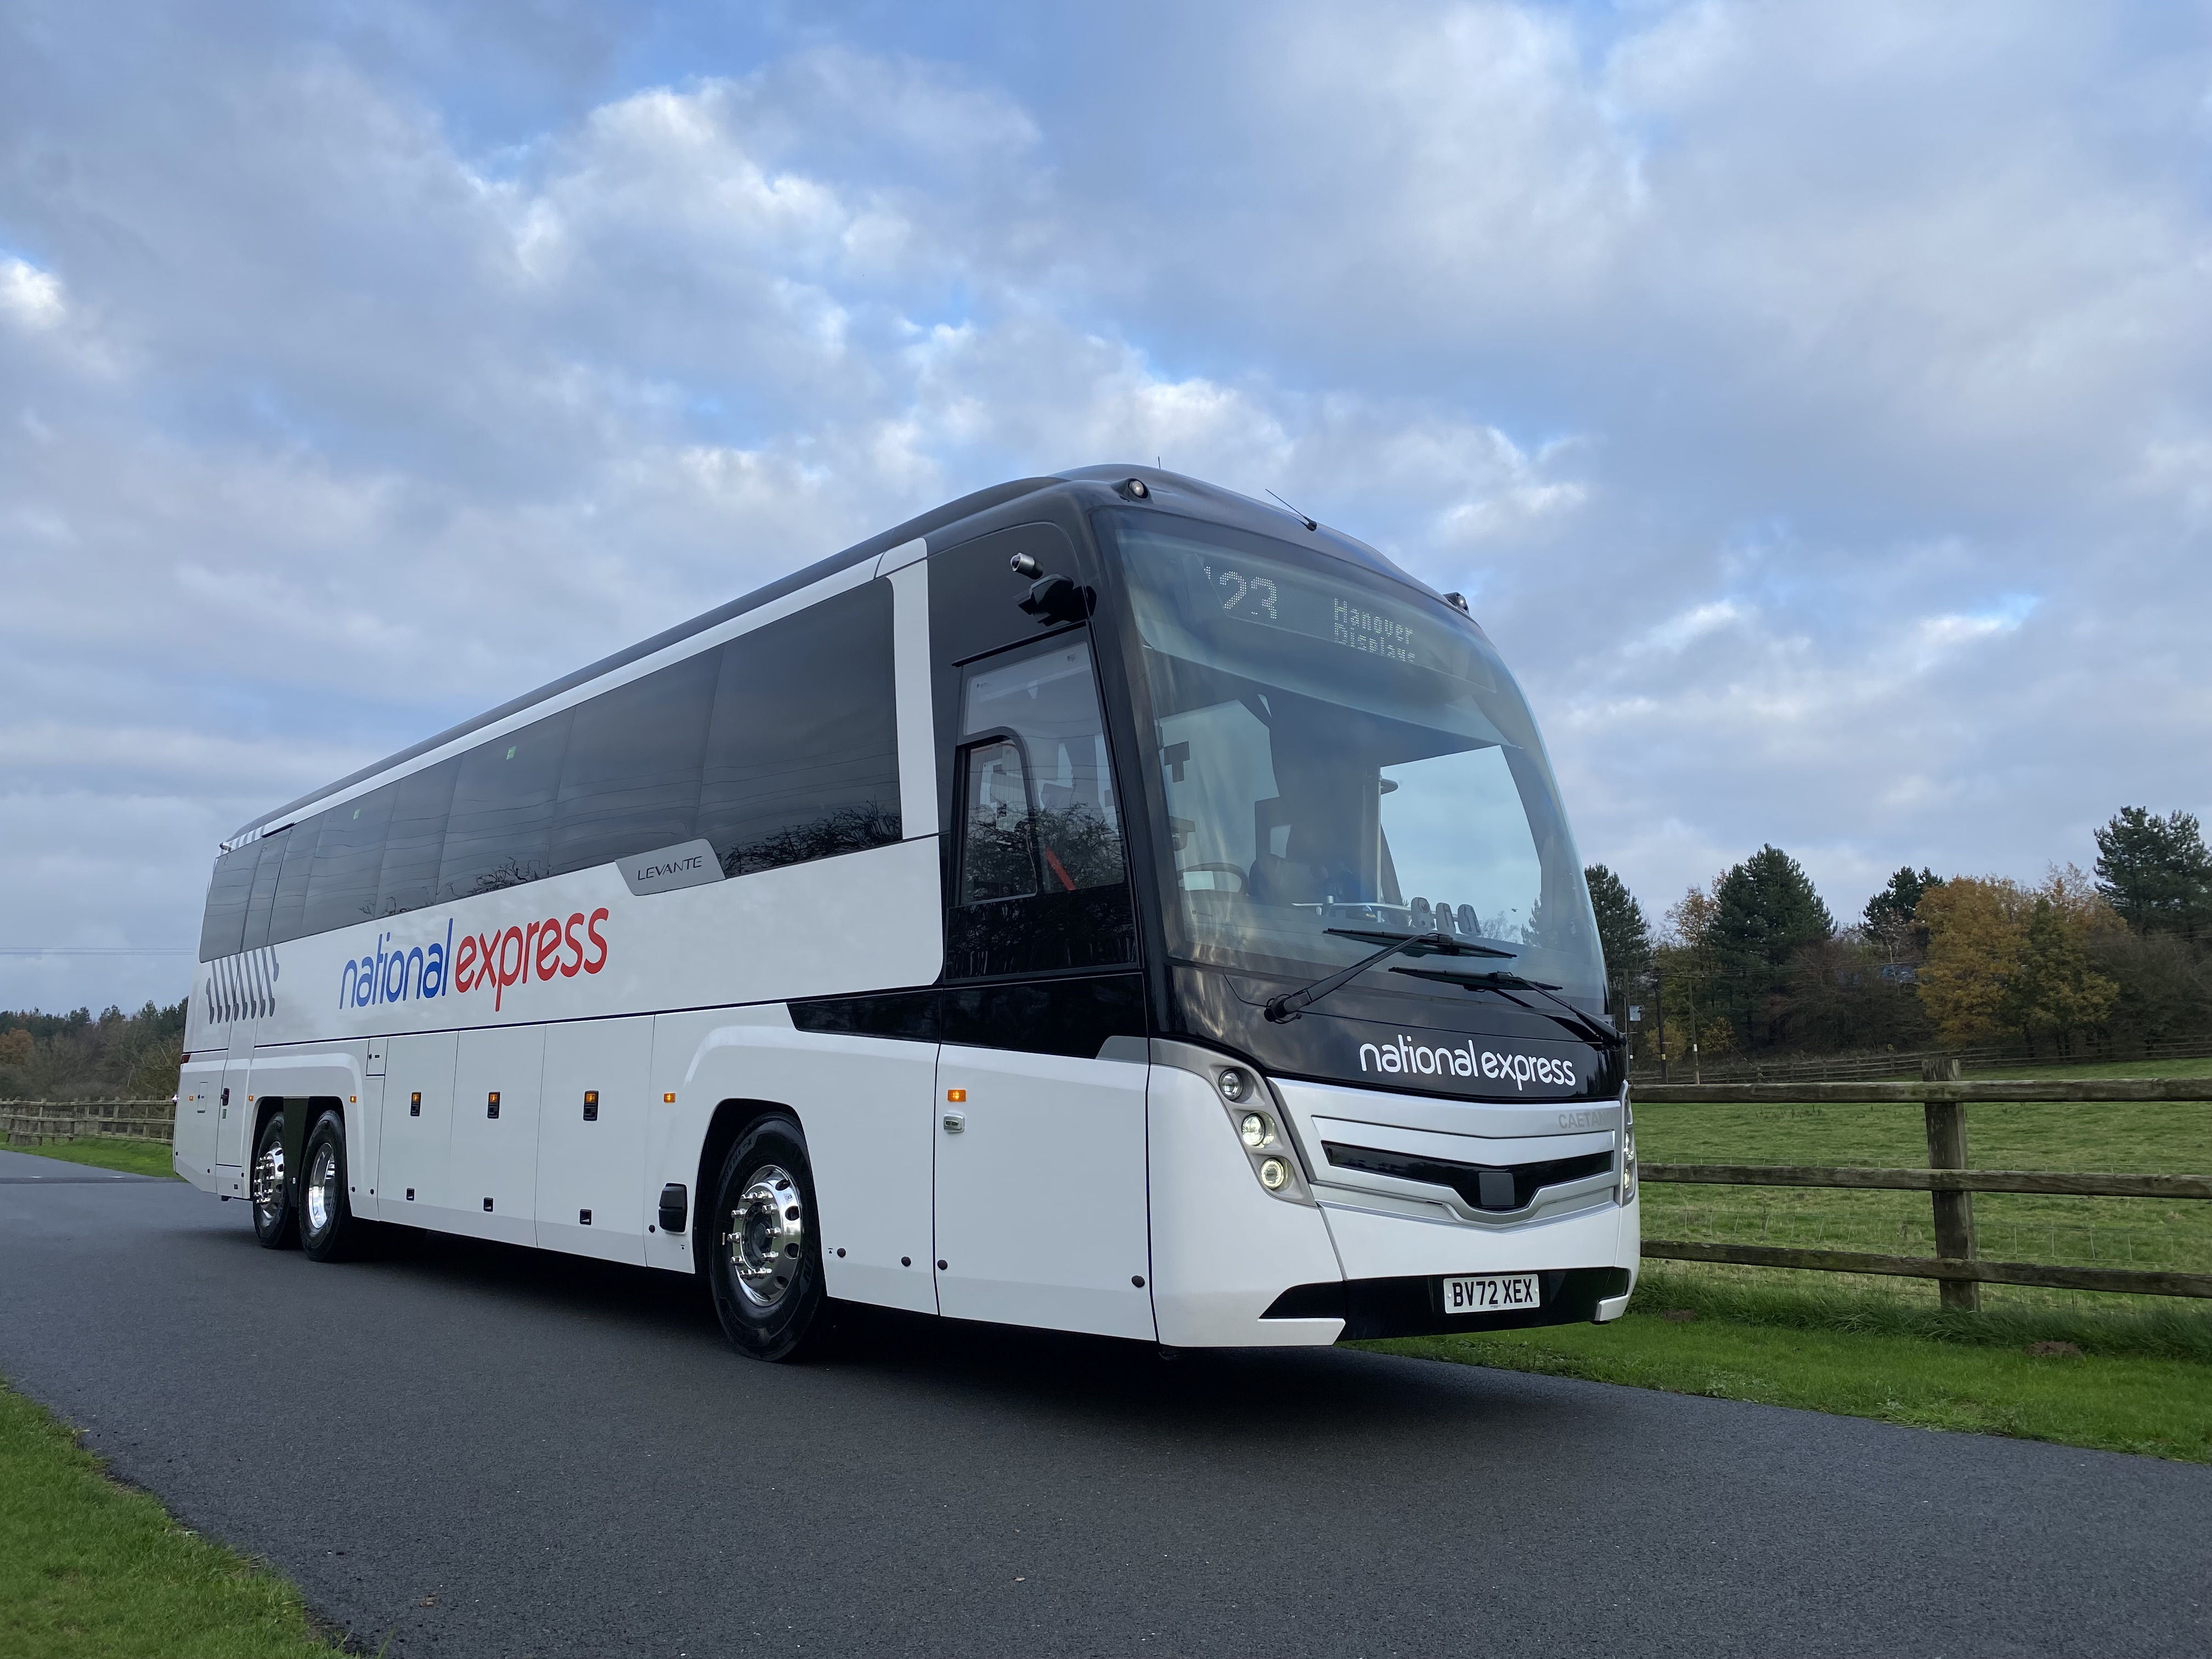 Levante IIIA mirrorless coach model